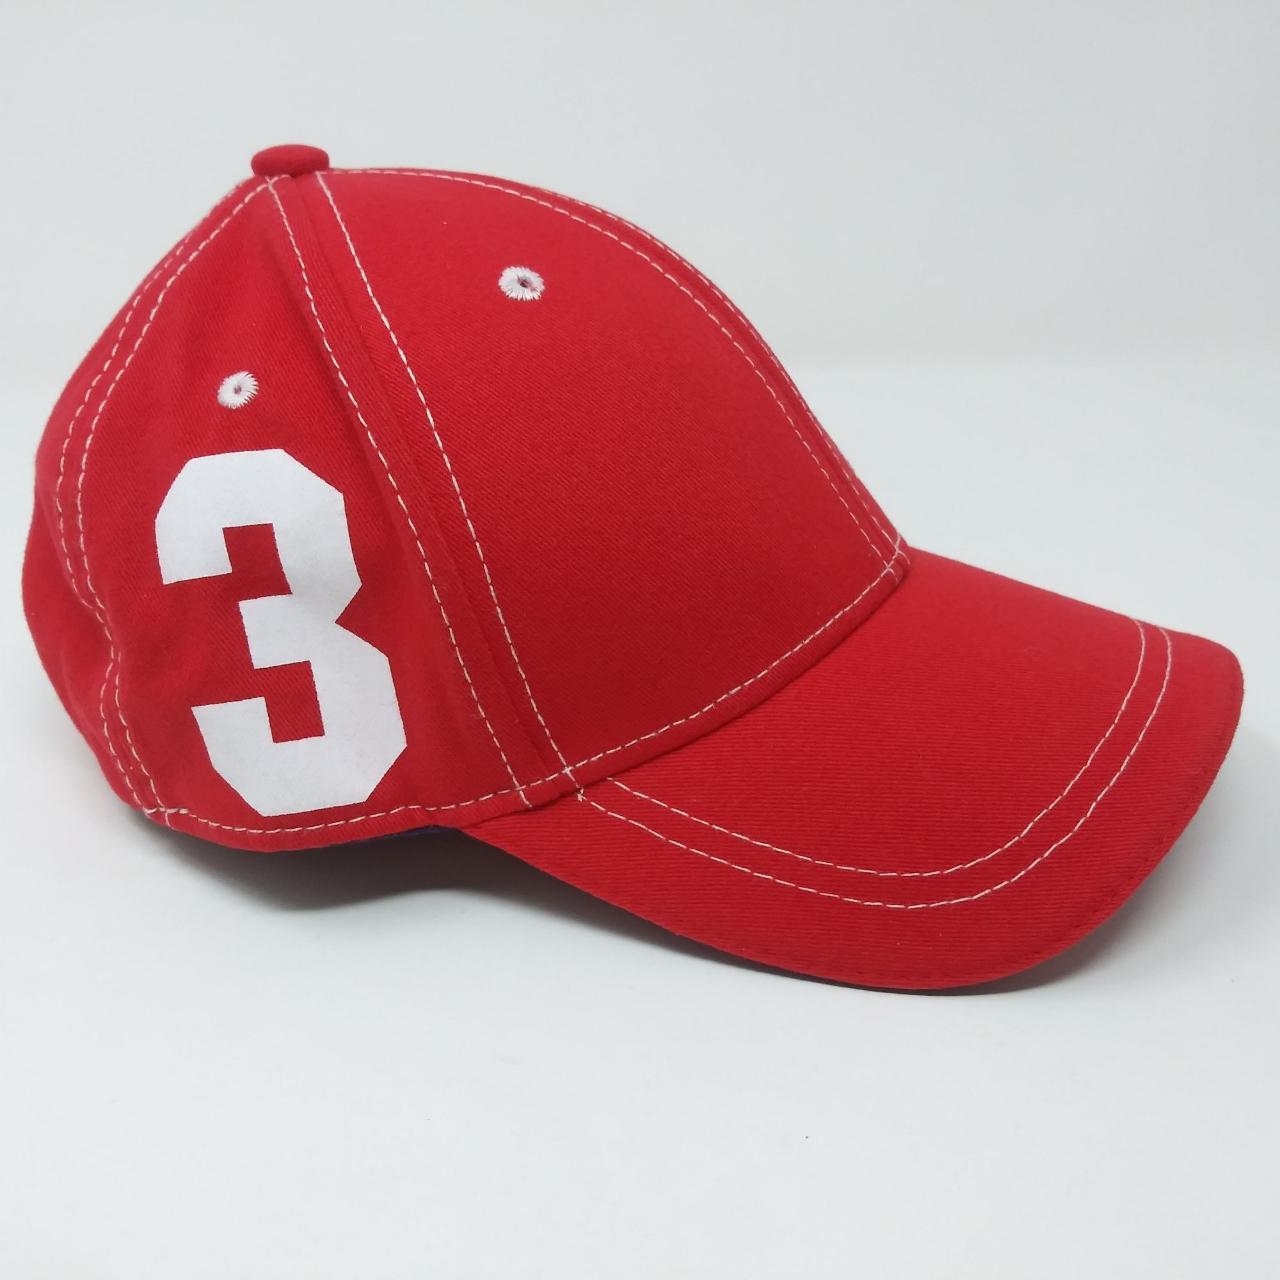 U.S. Polo Assn. Men's Red Hat (3)